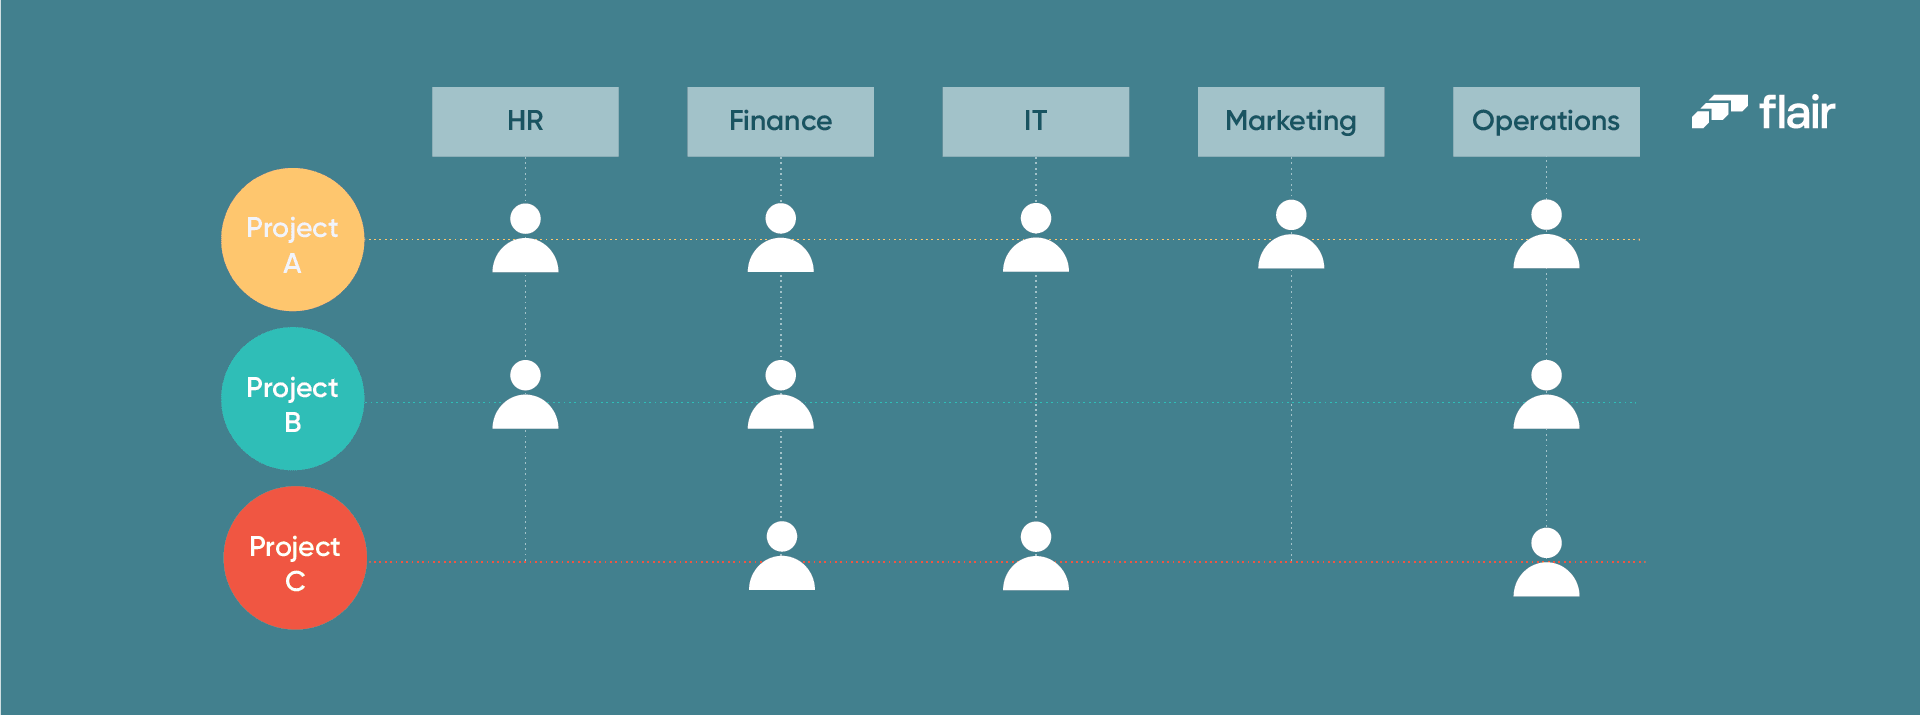 An example of a matrix diagram for HR teams.